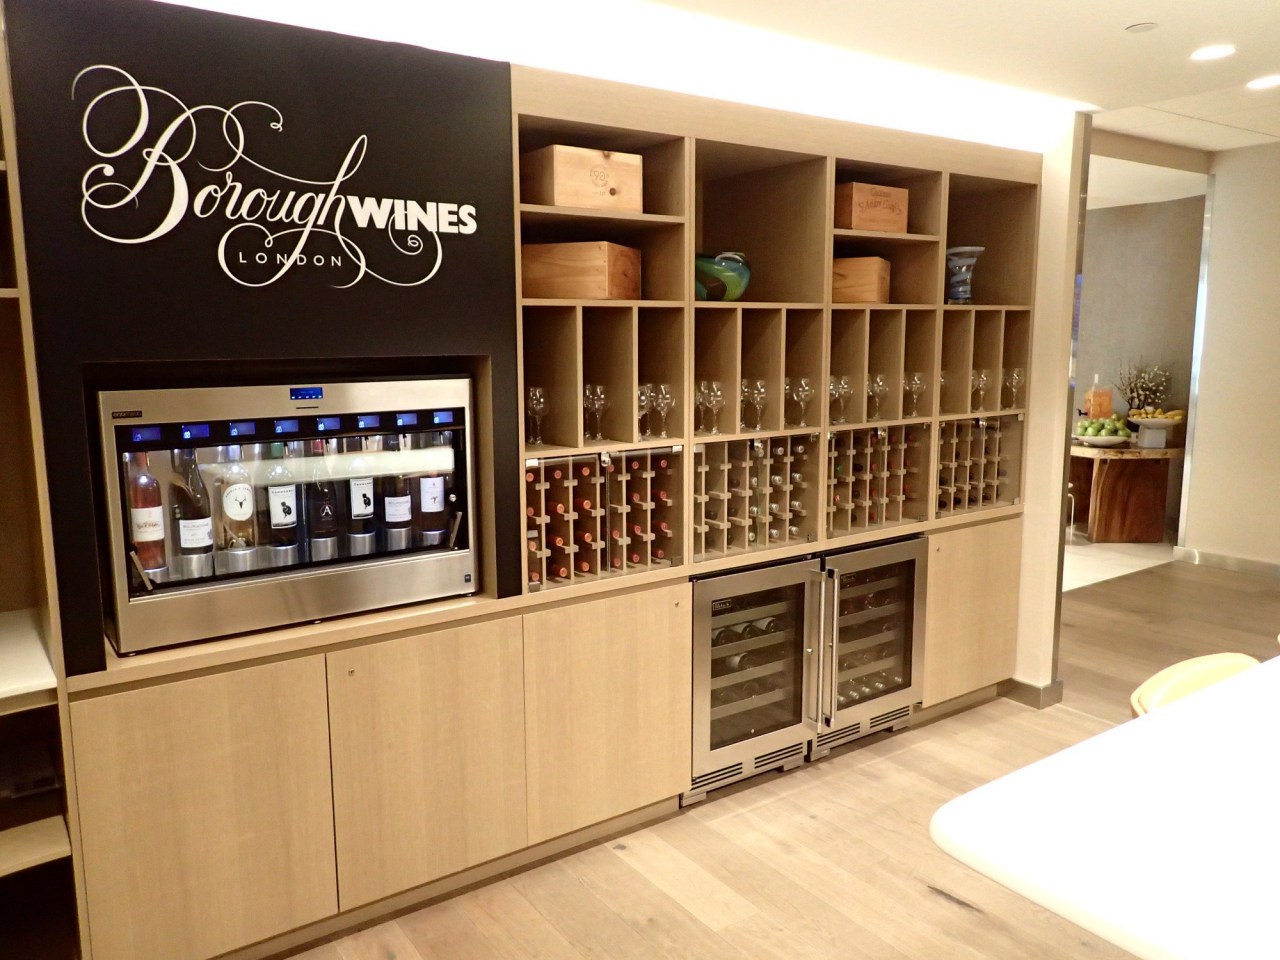 British Airways First Class Lounge JFK Borough Wines Dispenser